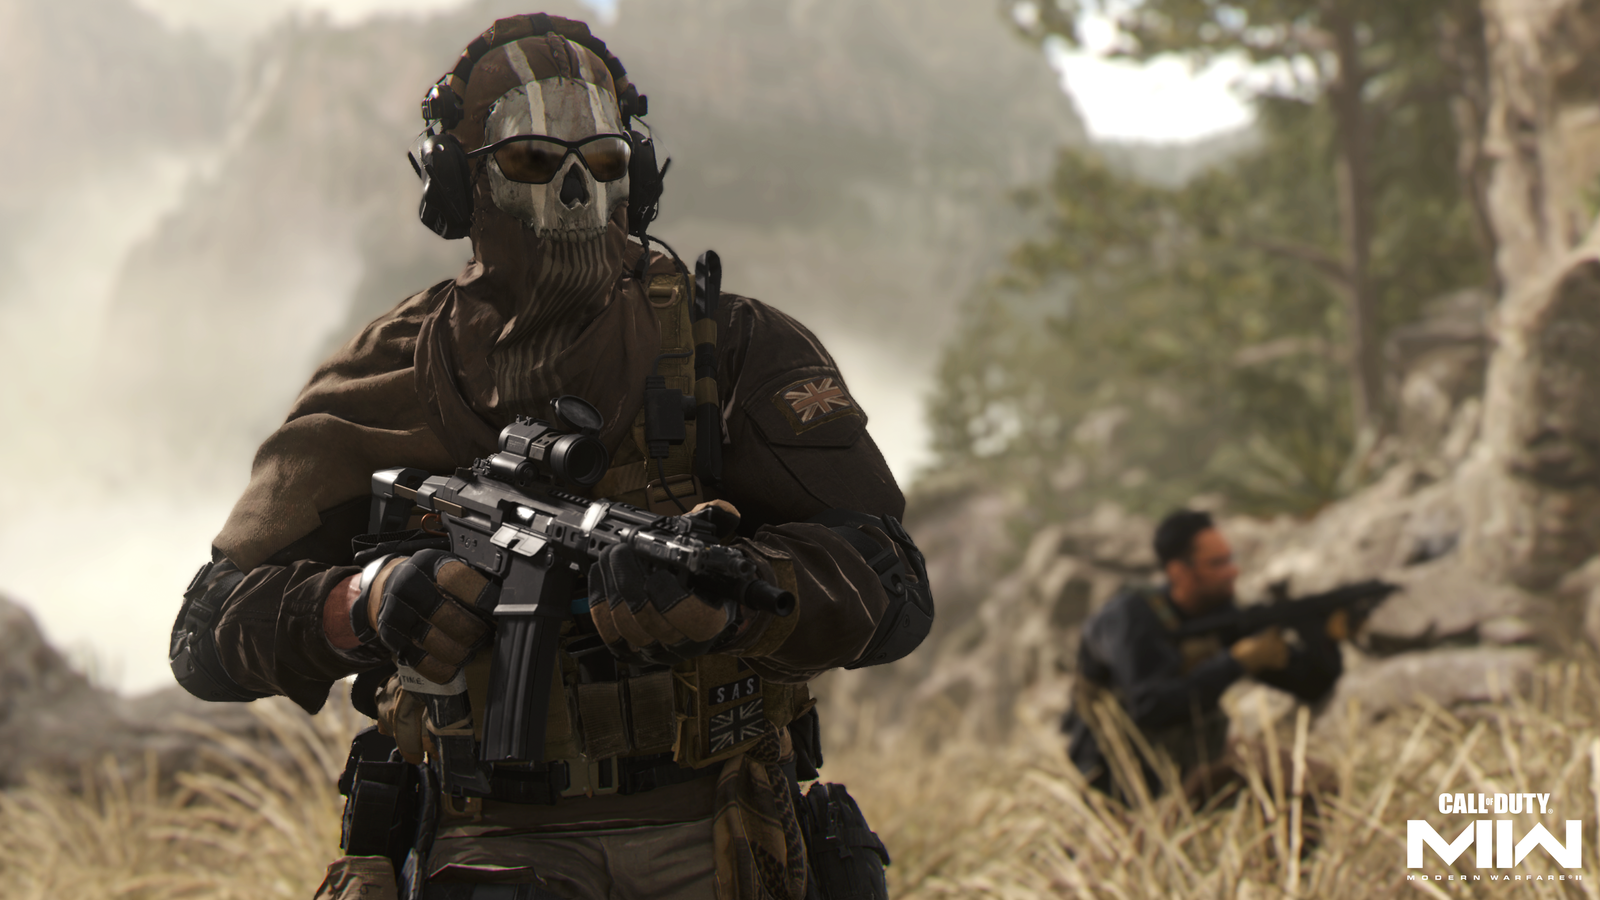 Call of Duty: Modern Warfare 2 release date announced, June 8